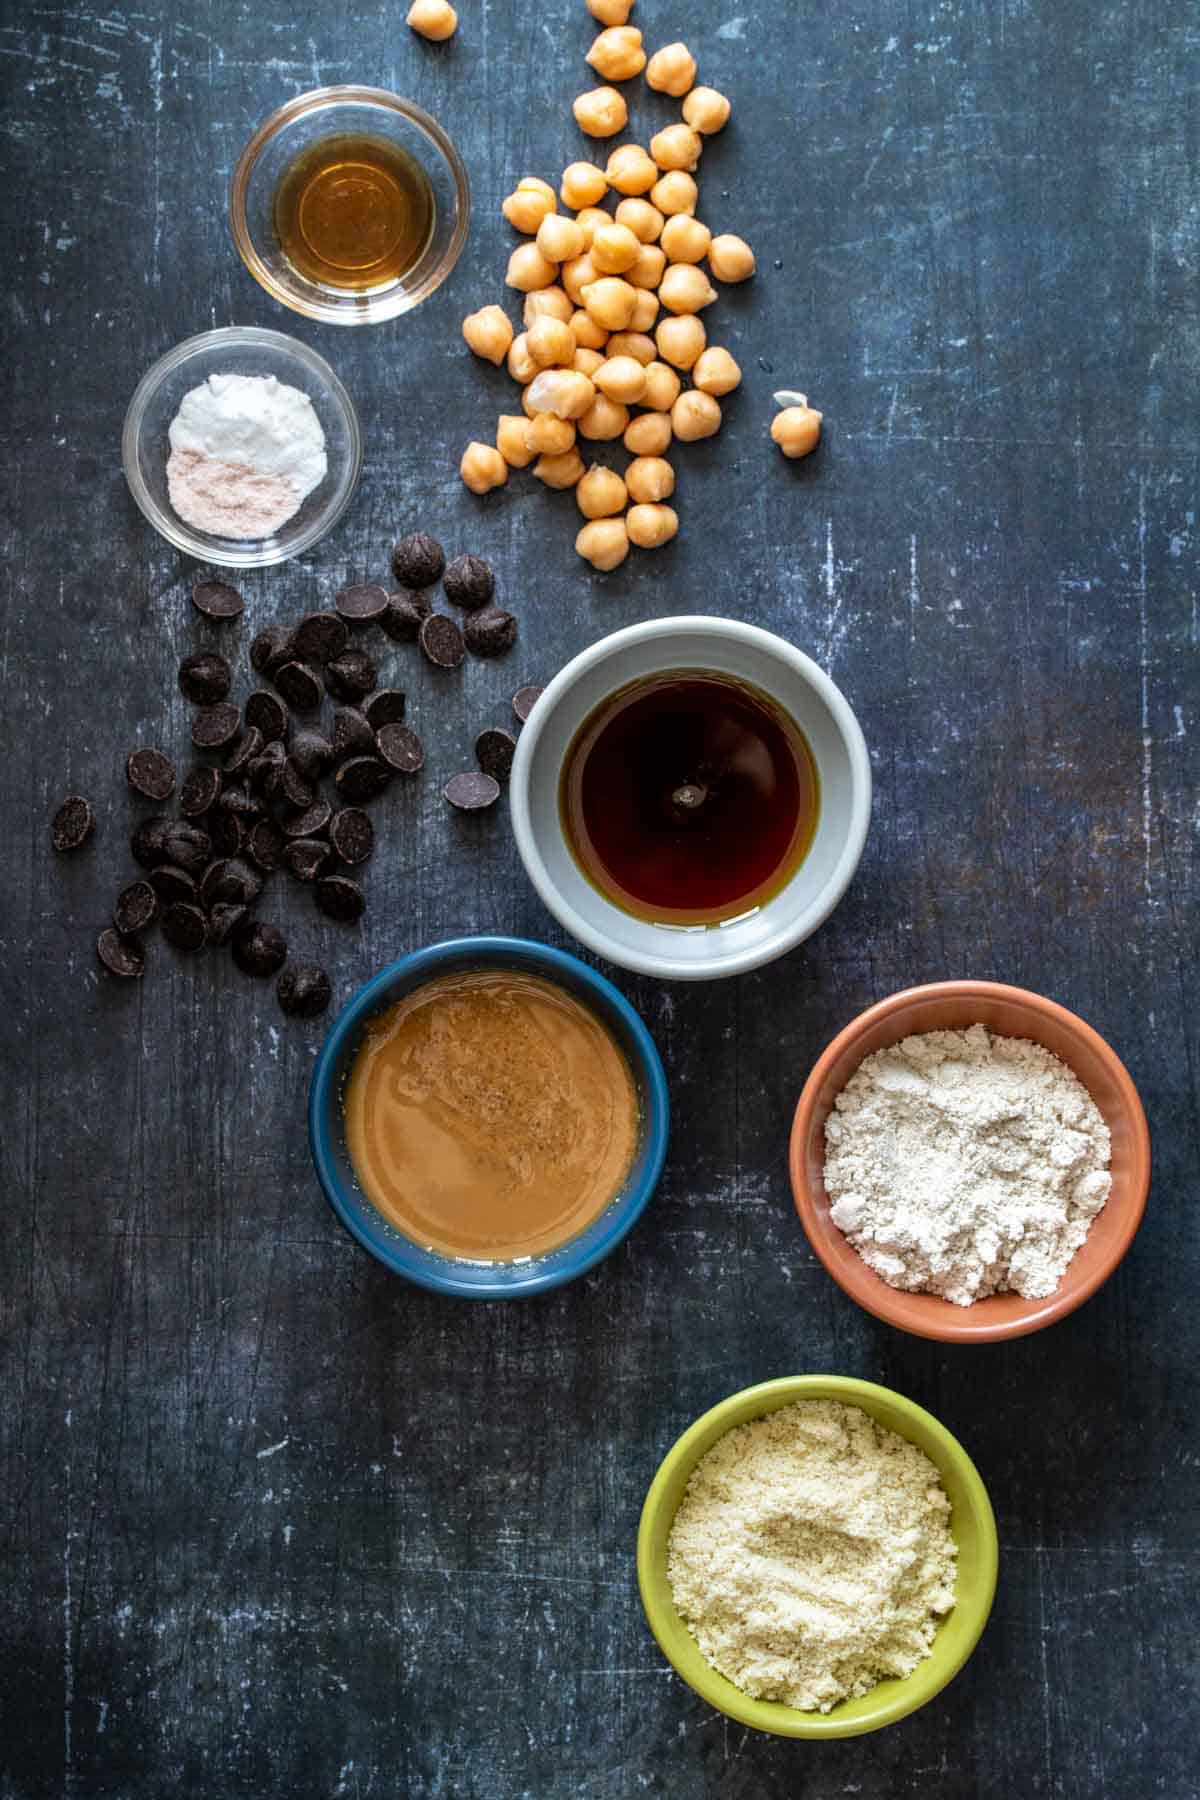 Top view of ingredients needed to make chickpea blondies vegan in bowls on a dark surface.